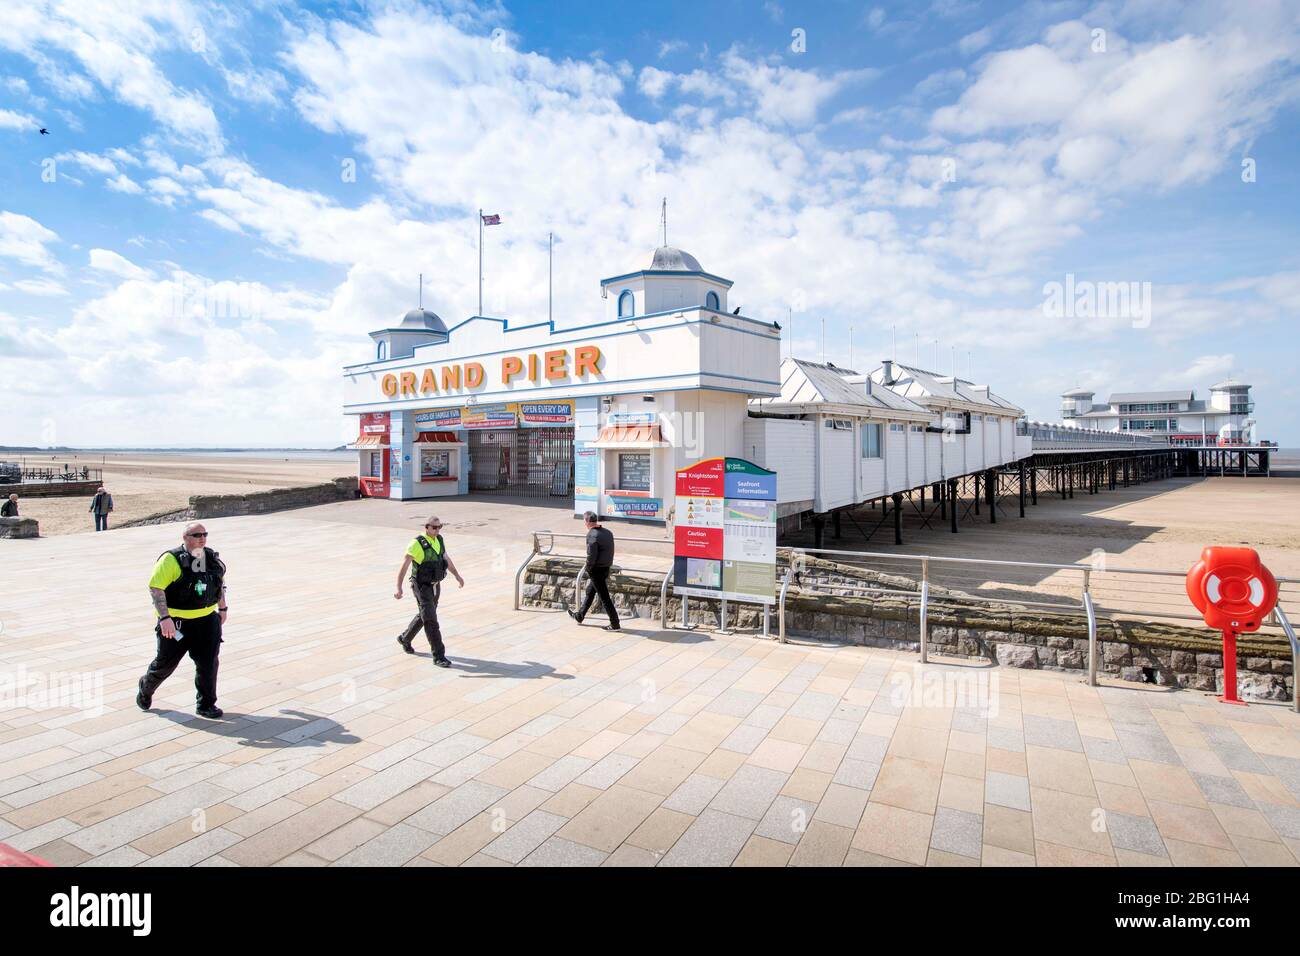 Two community street wardens pass the Grand Pier at Weston-super-Mare during the Coronavirus lockdown, UK Stock Photo